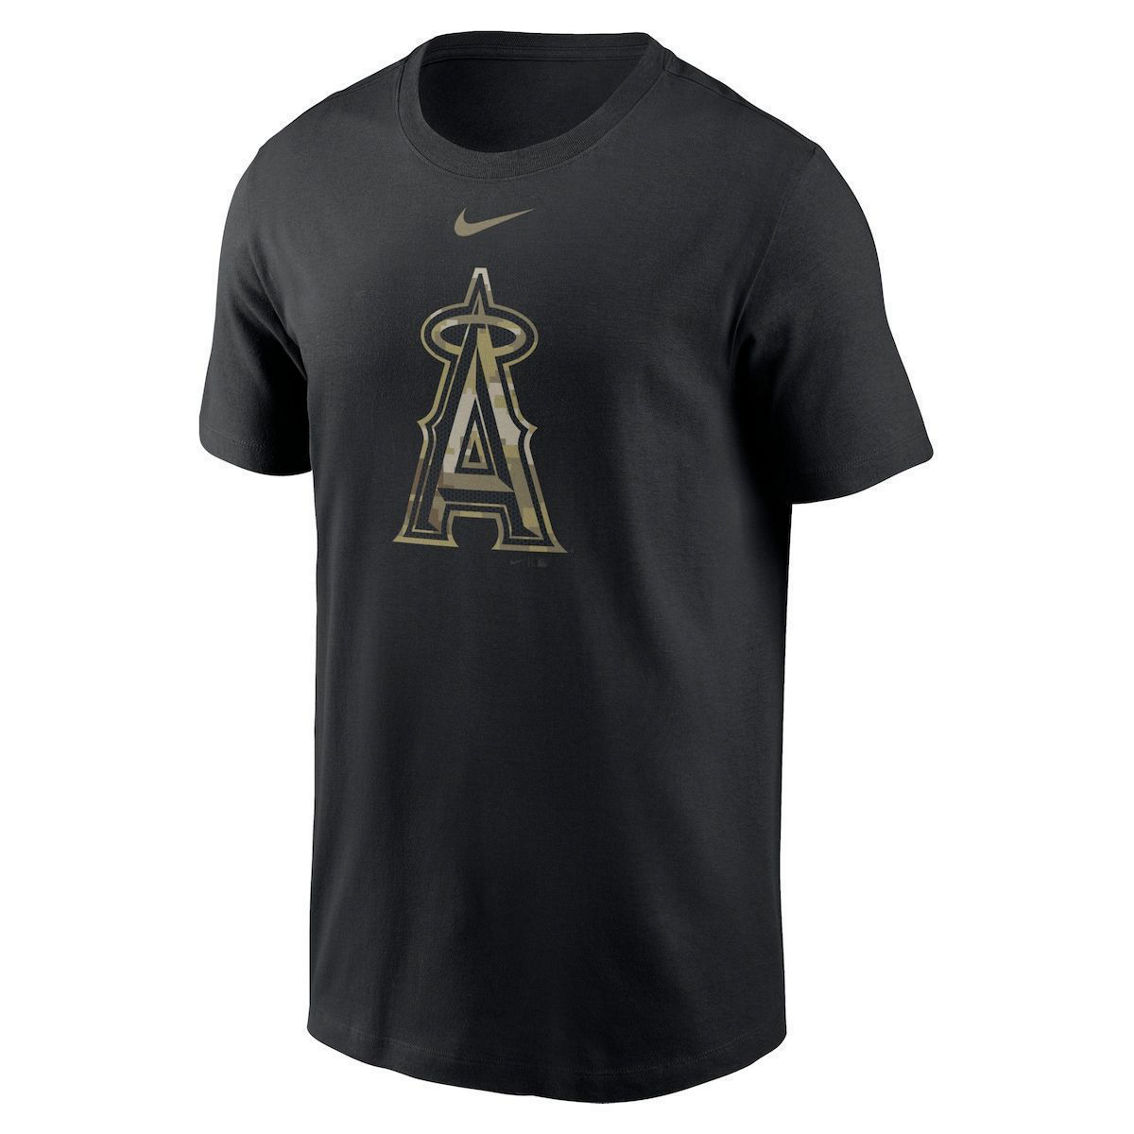 Men's Nike Black Los Angeles Angels Camo Logo Team T-Shirt - Image 3 of 4